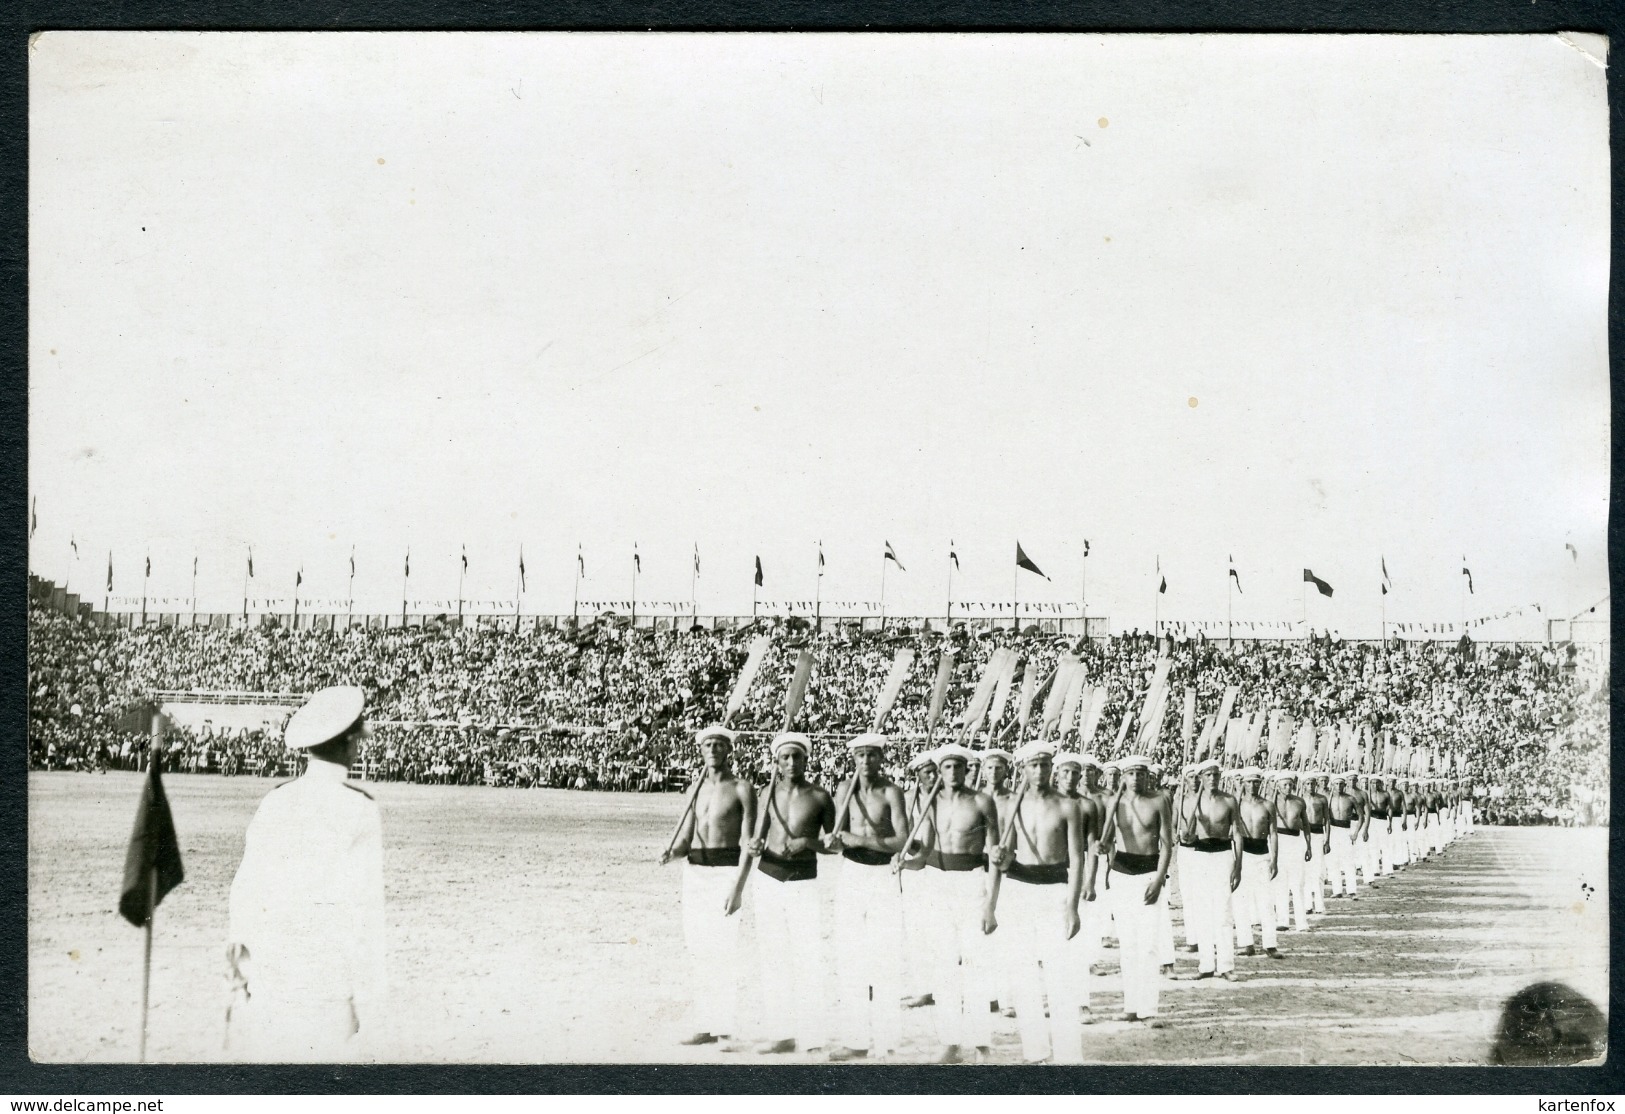 Foto, Beograd, Stadion, Ruderer, Militär, 1930, Foto ZSAK - Serbie